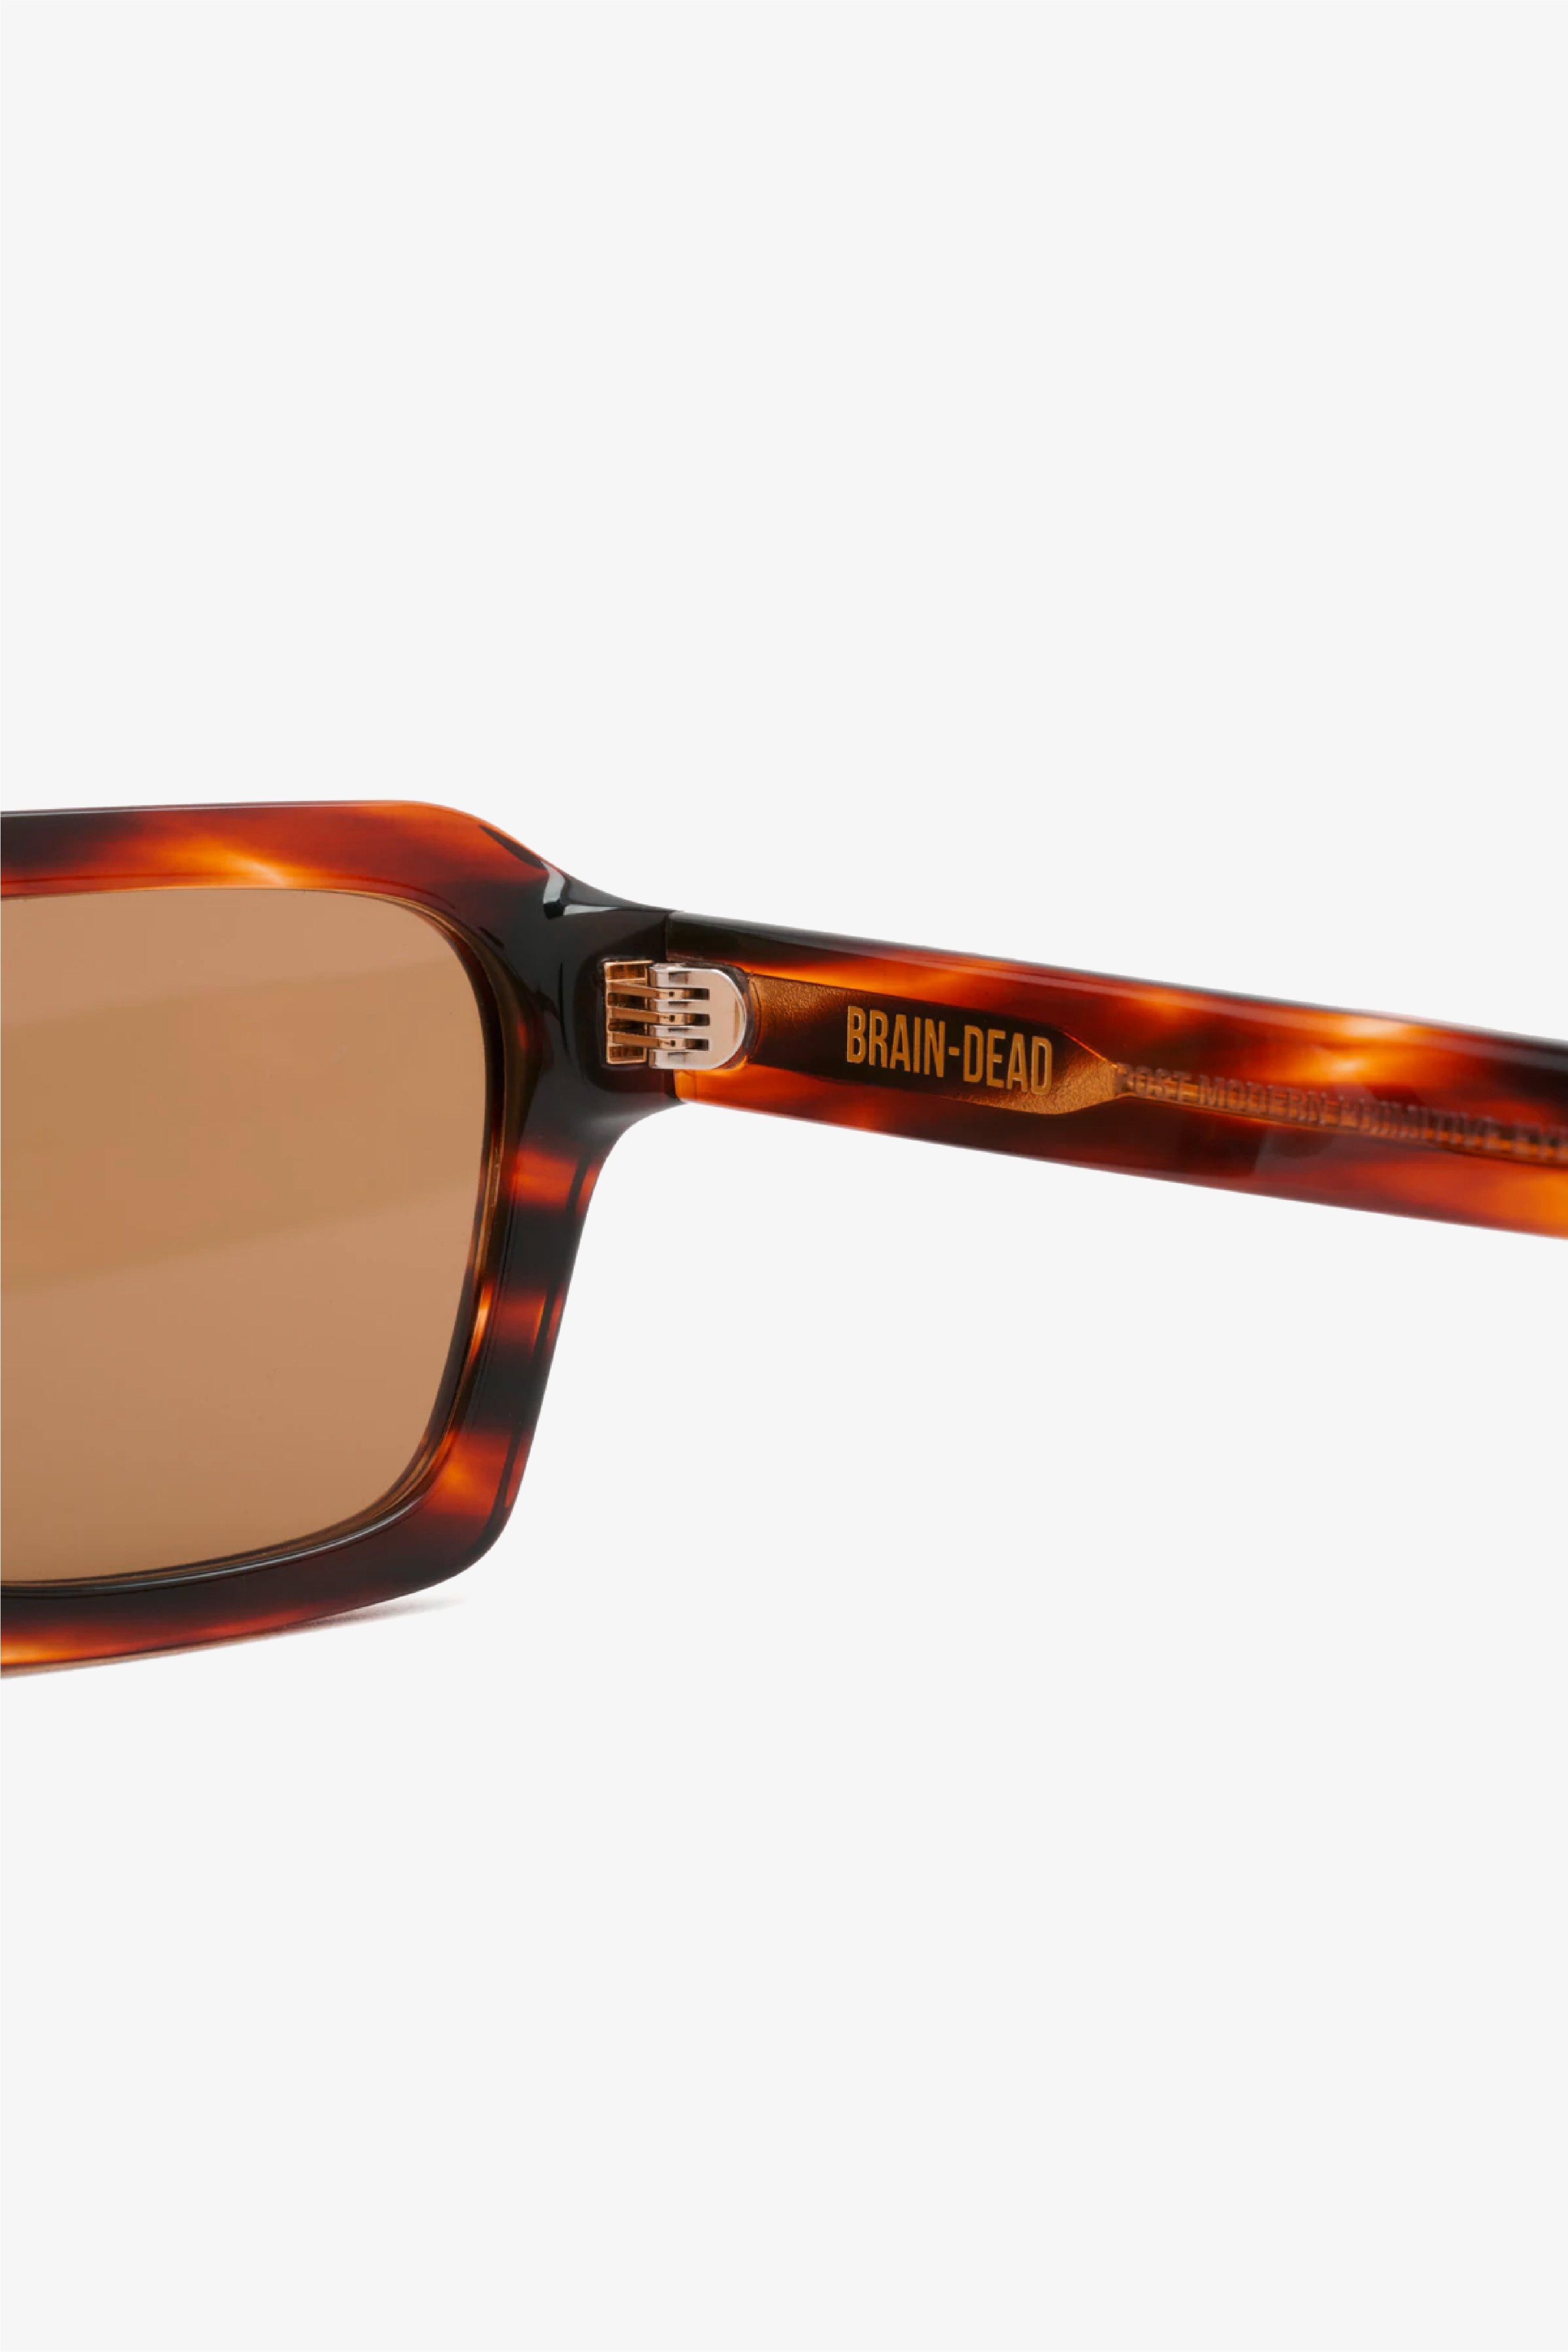 Selectshop FRAME - BRAIN DEAD Stauton Sunglasses All-Accessories Dubai